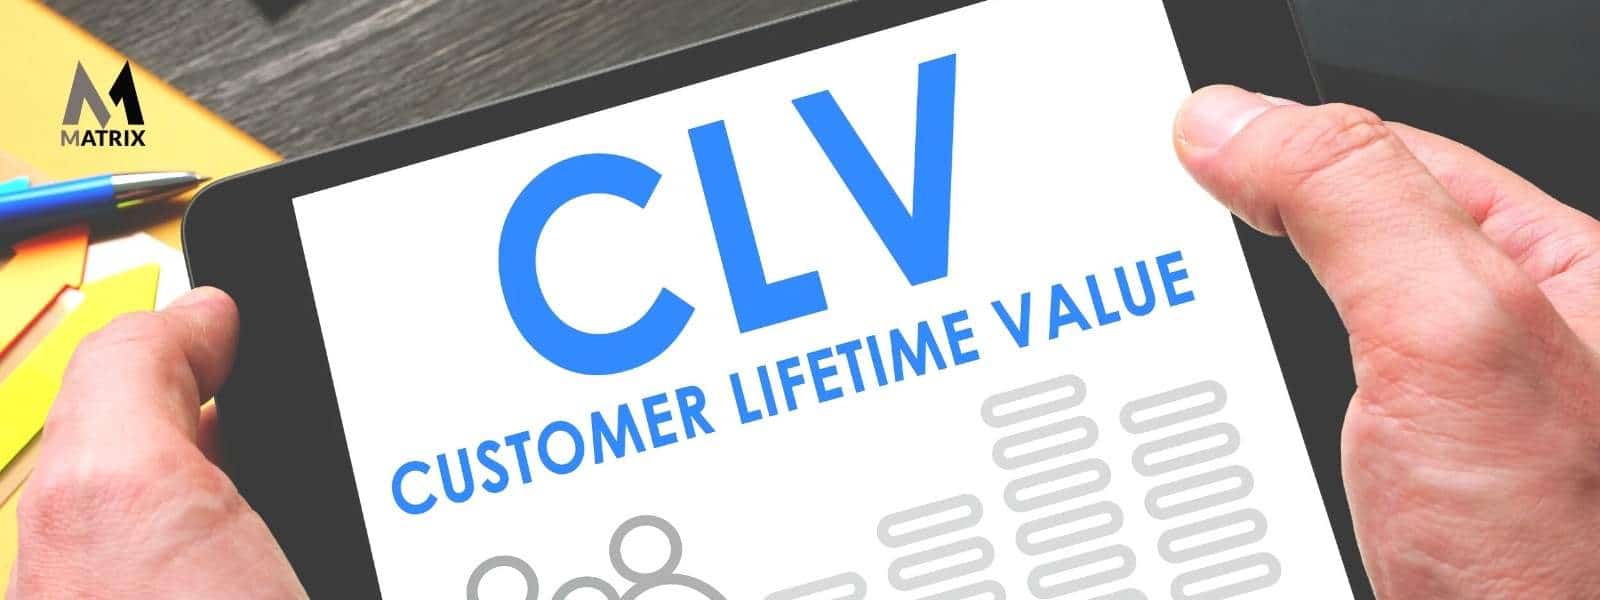 calculate customer lifetime value